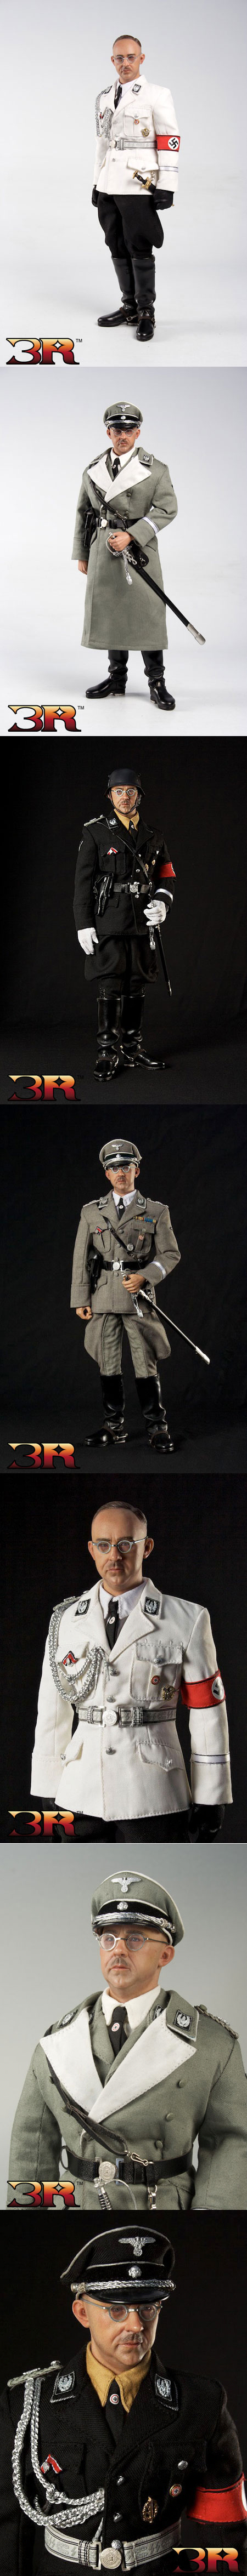 【3R】GM606 ナチス親衛隊 第4代親衛隊全国指導者 ハインリヒ・ヒムラー Heinrich Himmler